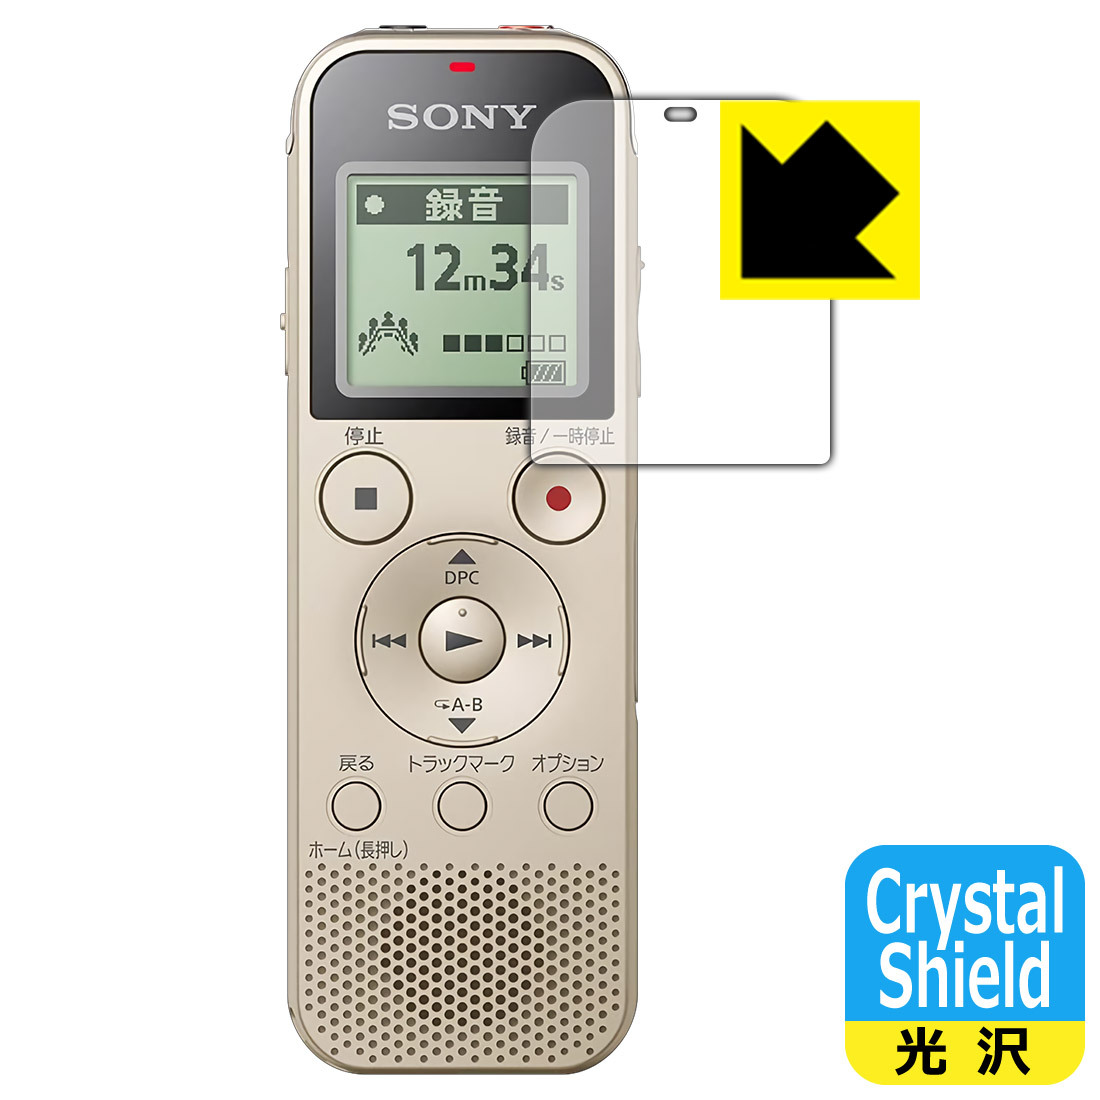  стерео IC магнитофон ICD-PX470F для . пузырь * фтор . грязный пальто! глянец защитная плёнка Crystal Shield